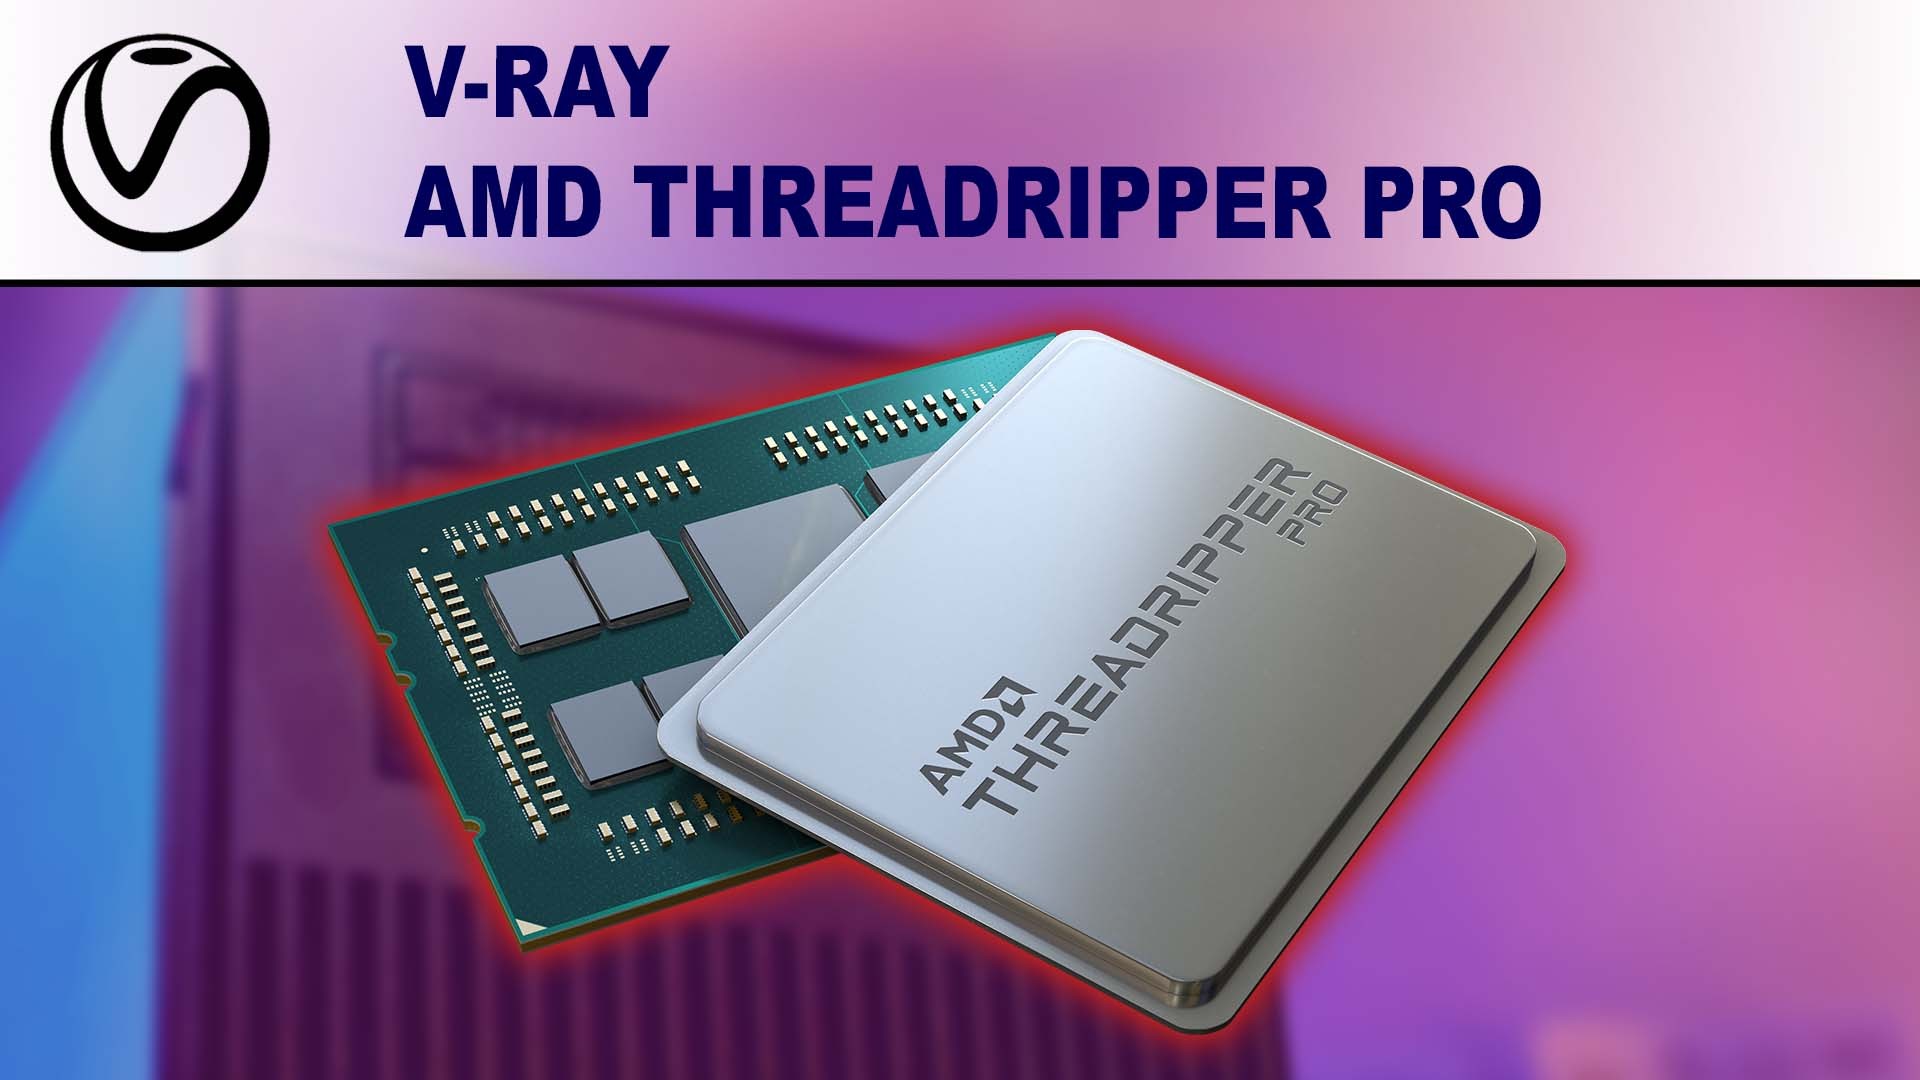 AMD Ryzen Threadripper PRO 3000 Series for V-Ray